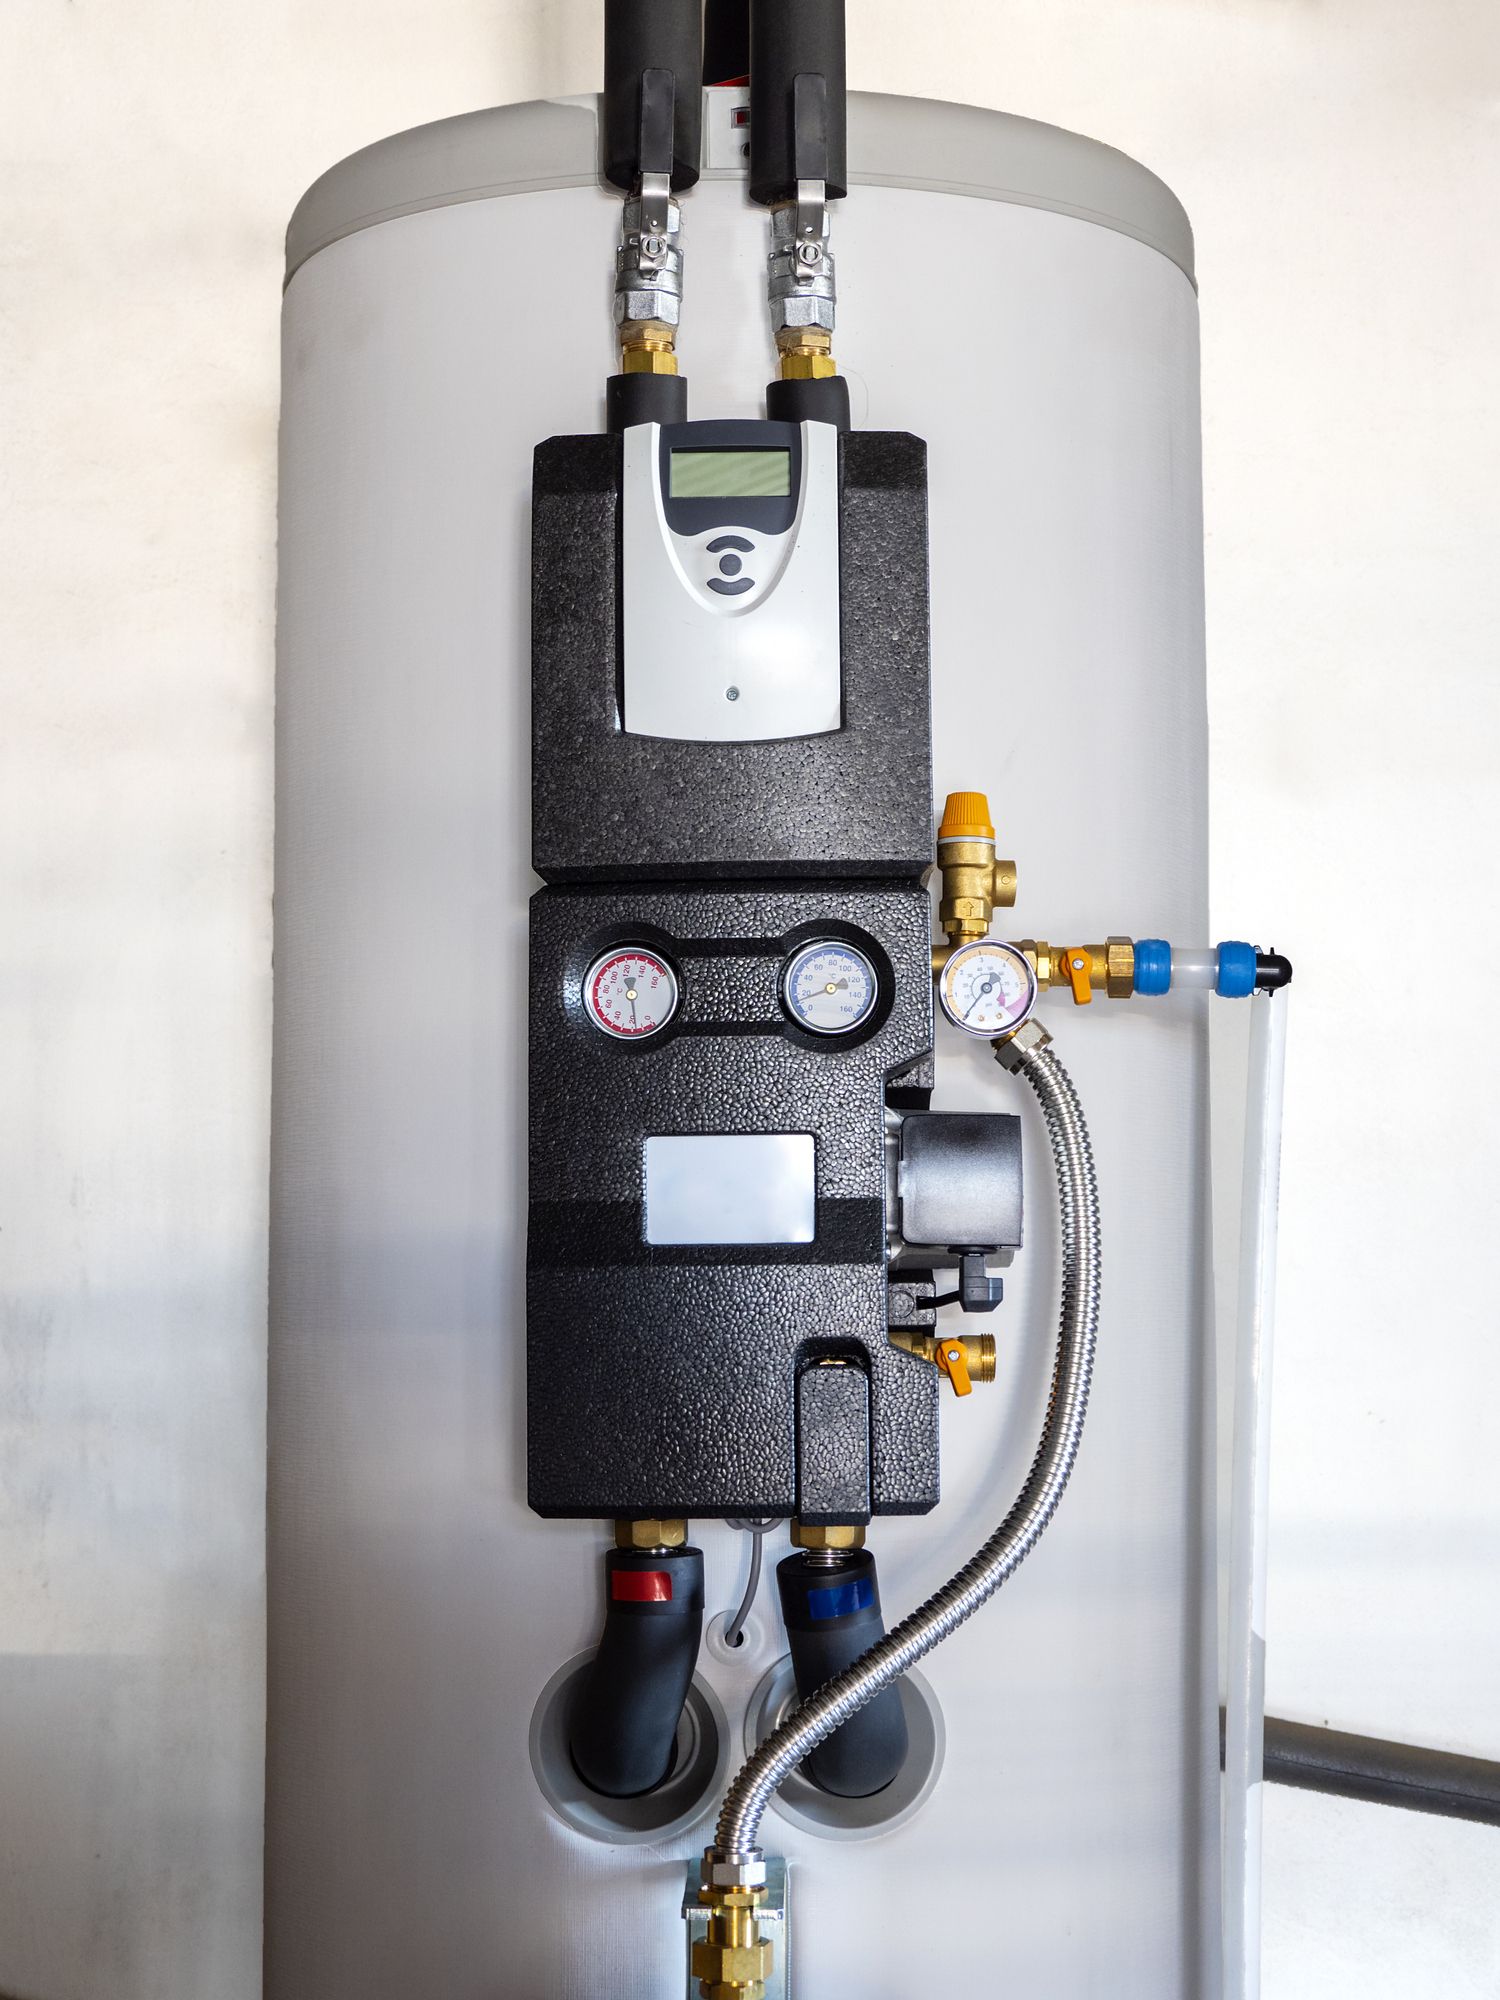 Water heaters San Diego <br>Water heater installation San Diego <br>Water heater repair San Diego 